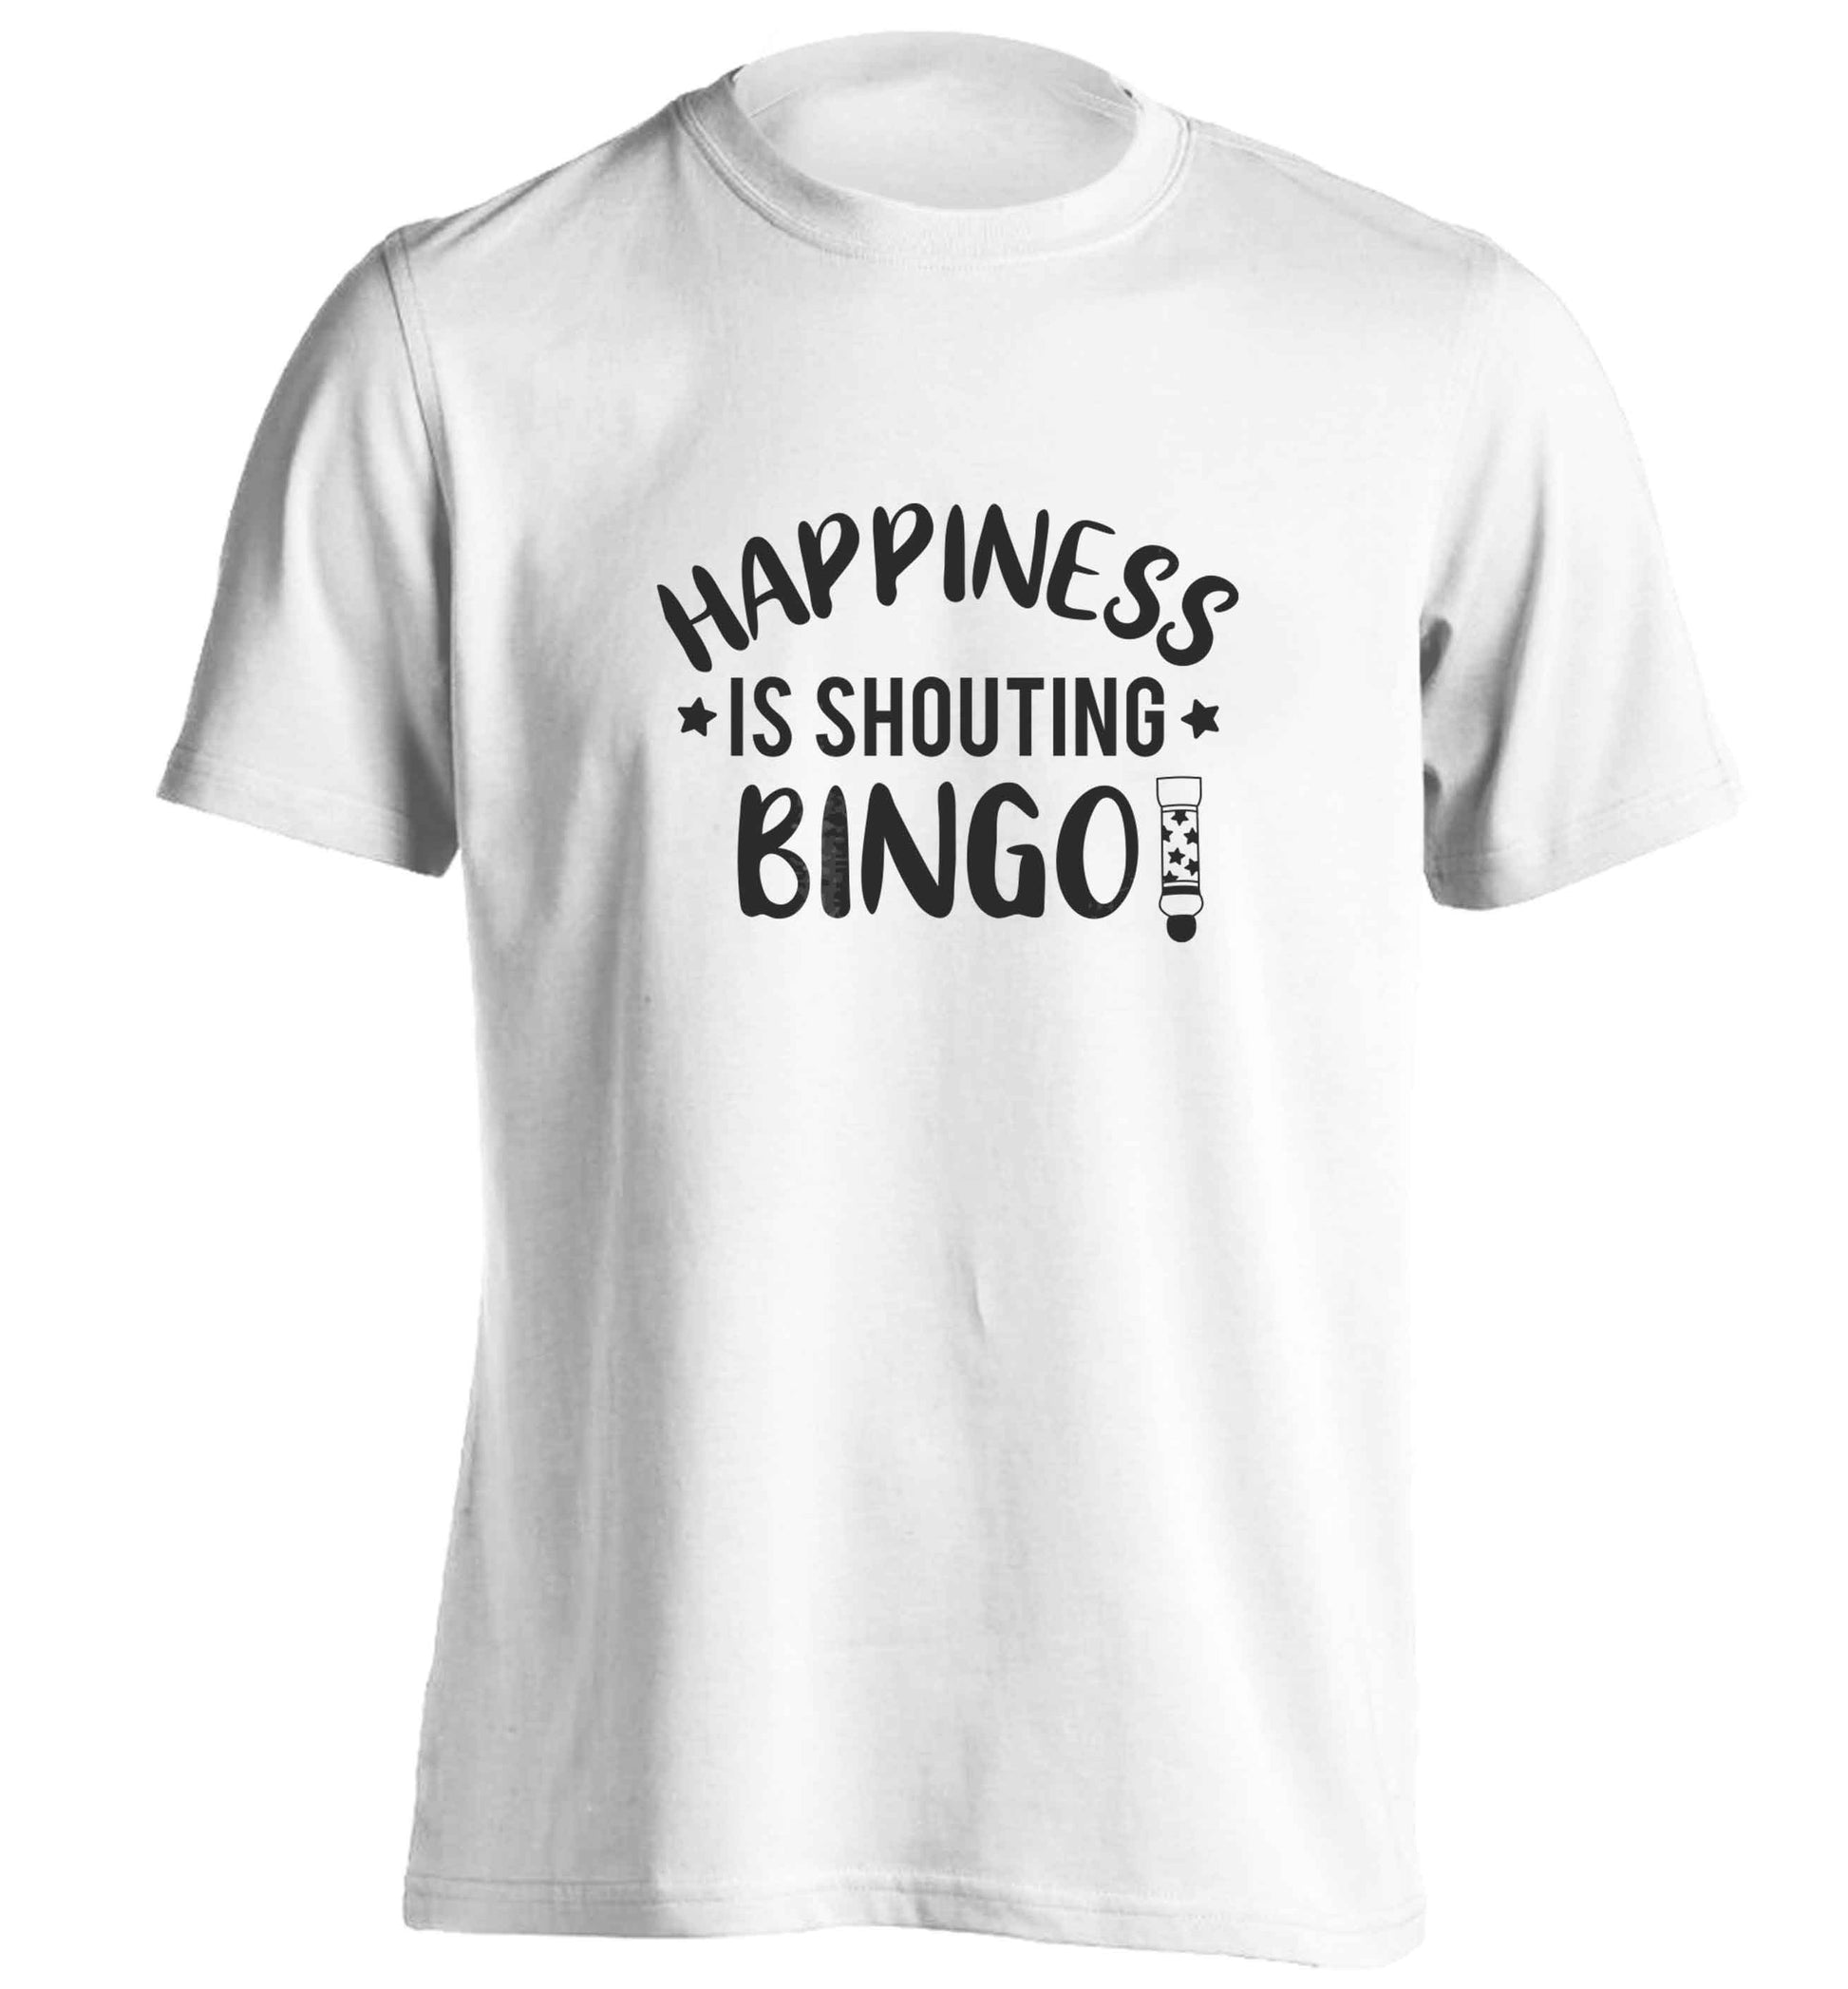 Happiness is shouting bingo! adults unisex white Tshirt 2XL